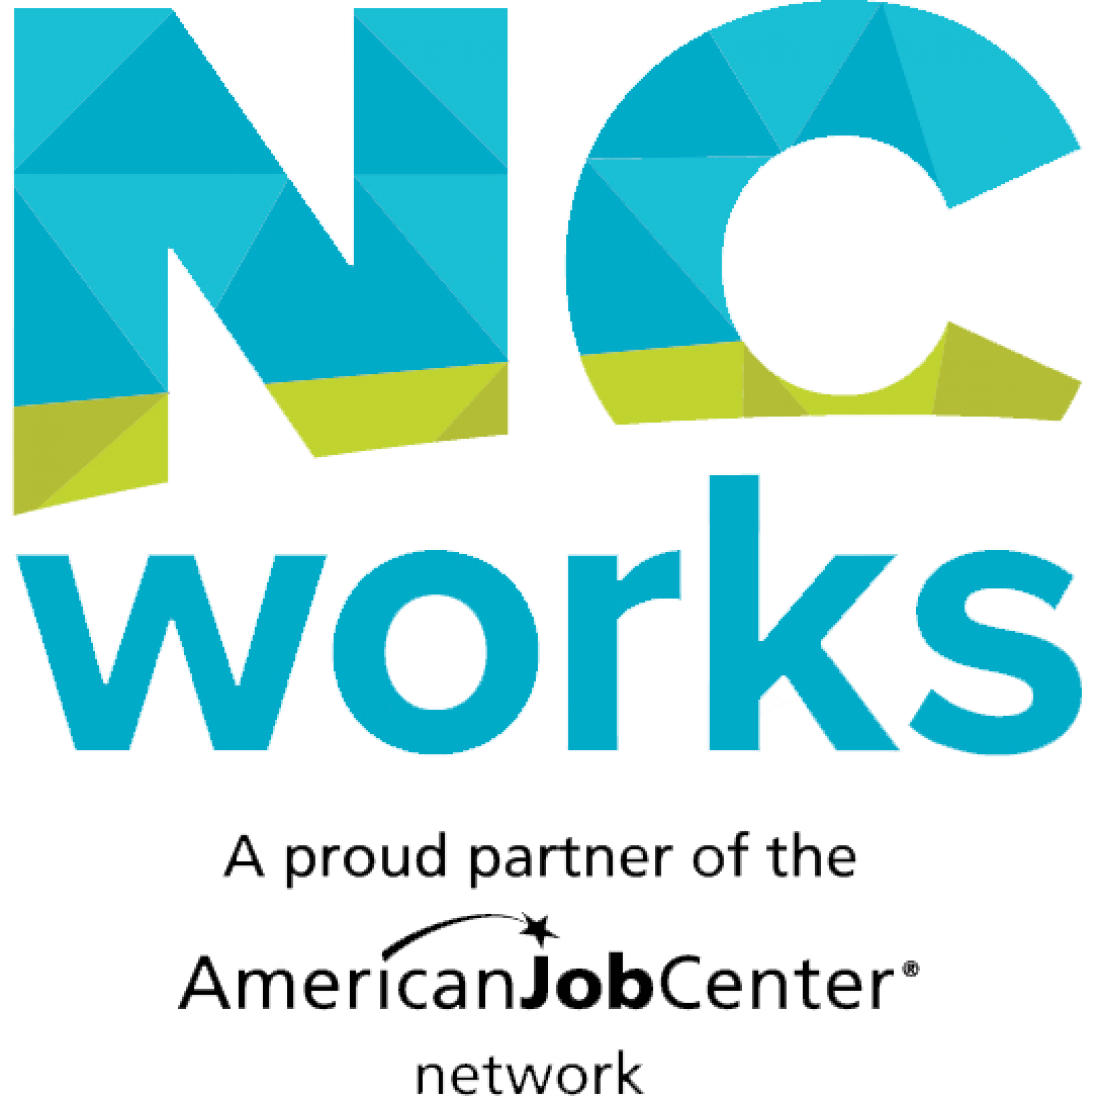 NCWorks logo